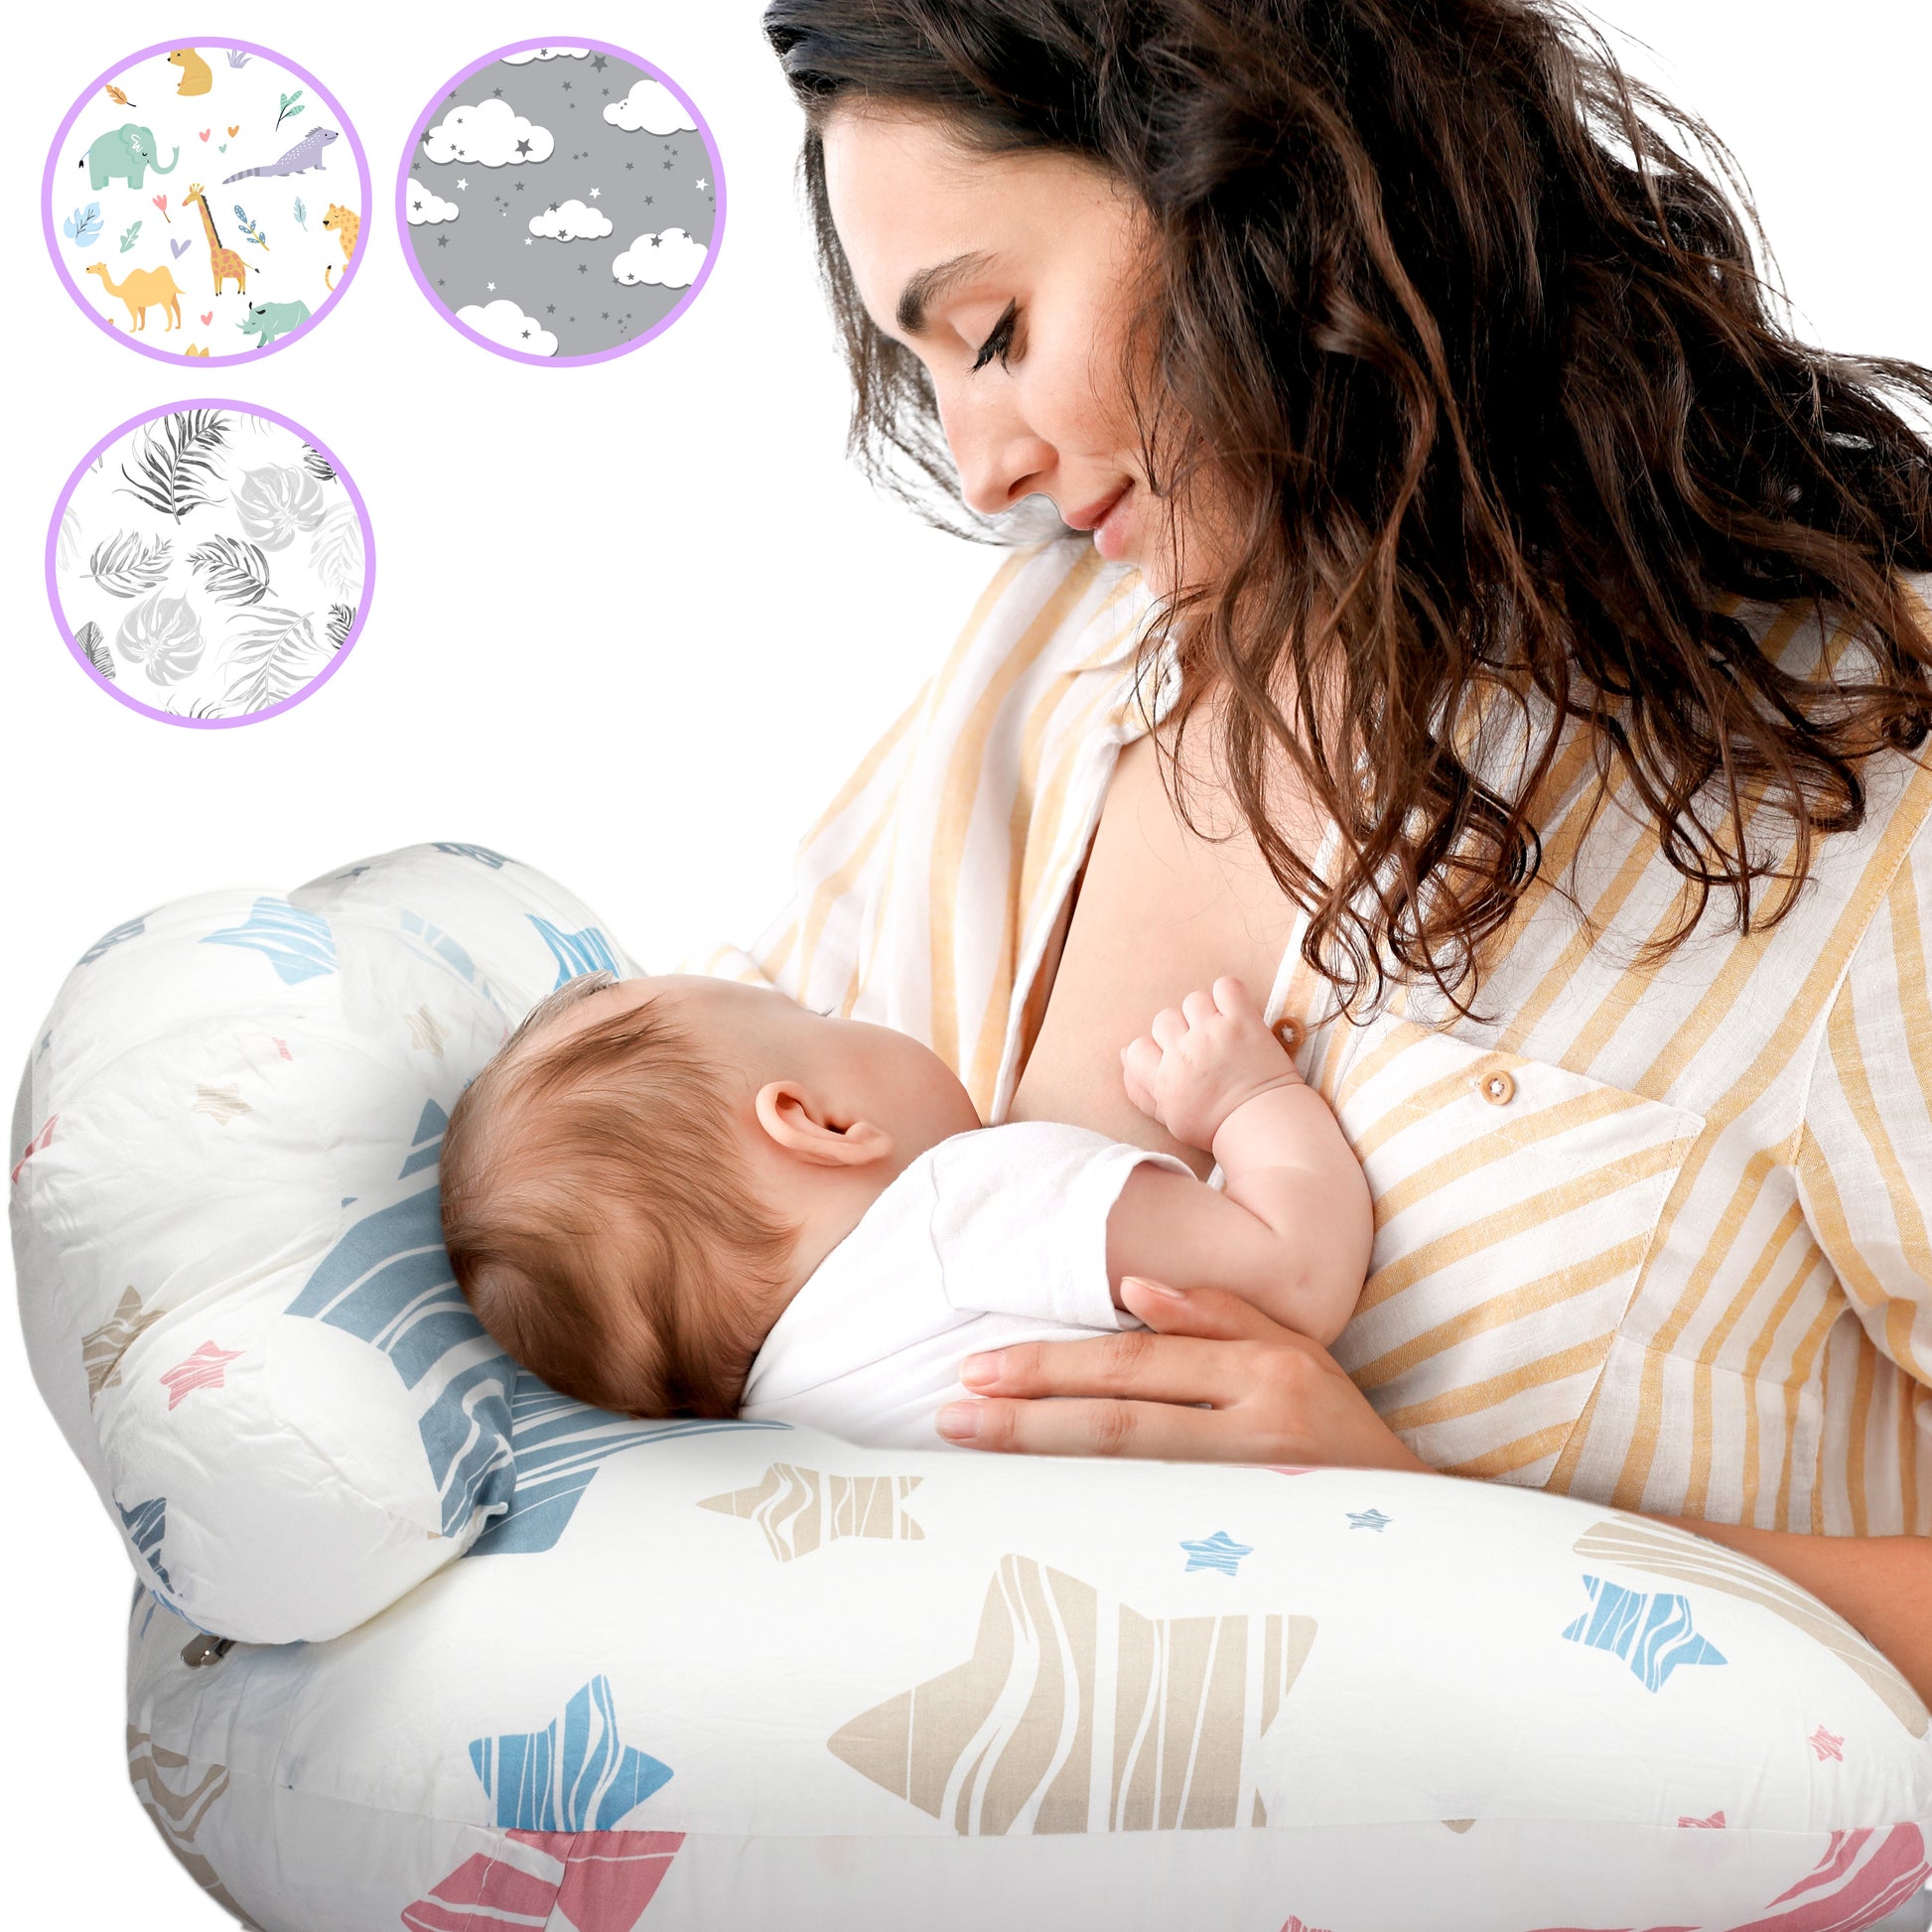 PILLANI Nursing Pillow for Breastfeeding & Bottle Feeding, Support Breast  Feeding Pillow for Mom & Baby,w/Adjustable Waist Strap, Removable Cotton